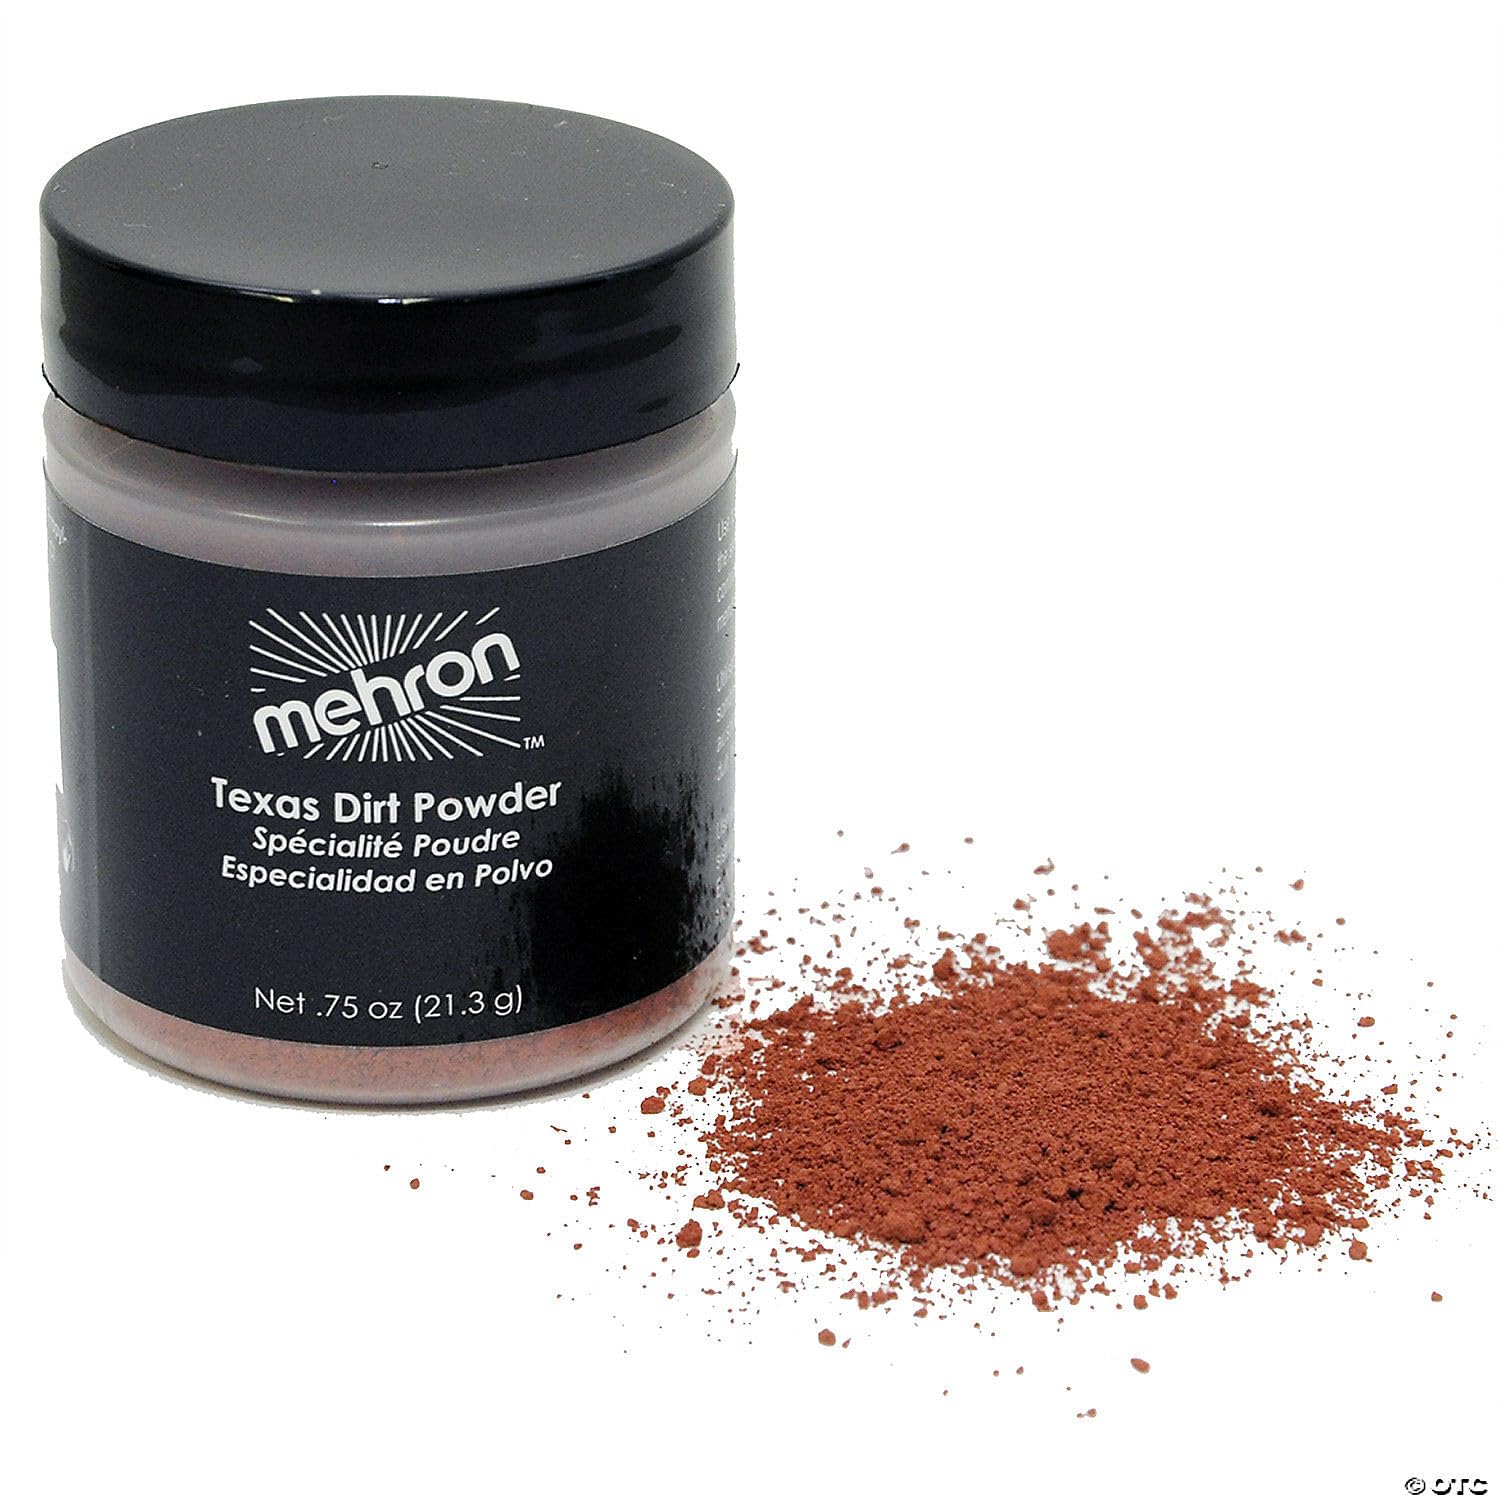 Mehron Makeup Special Effects Powder (2.3 Ounce) (Texas Dirt